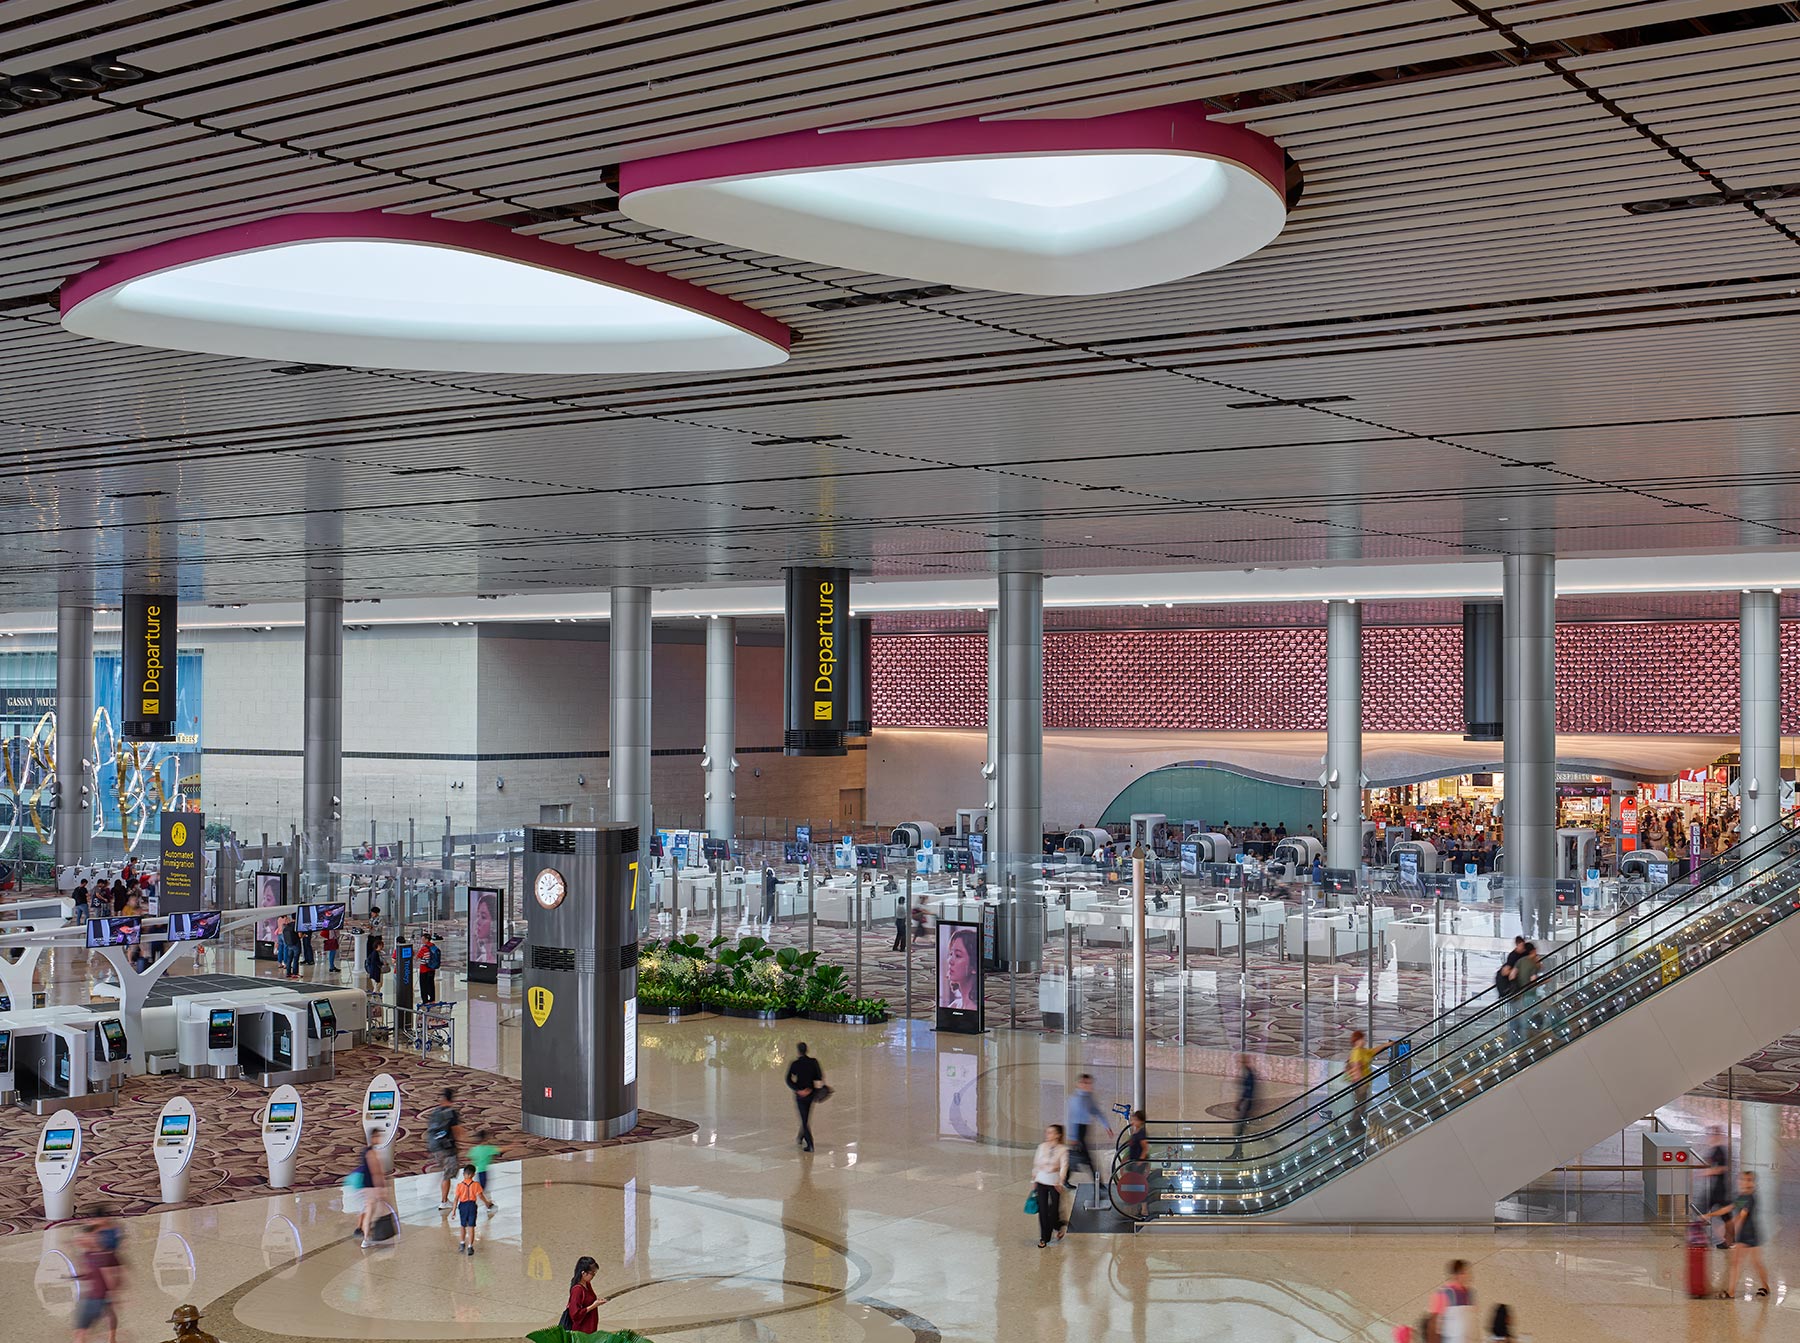 Owen Raggett. Architectural photographer, Singapore. Changi Airport Terminal 4, Singapore. 